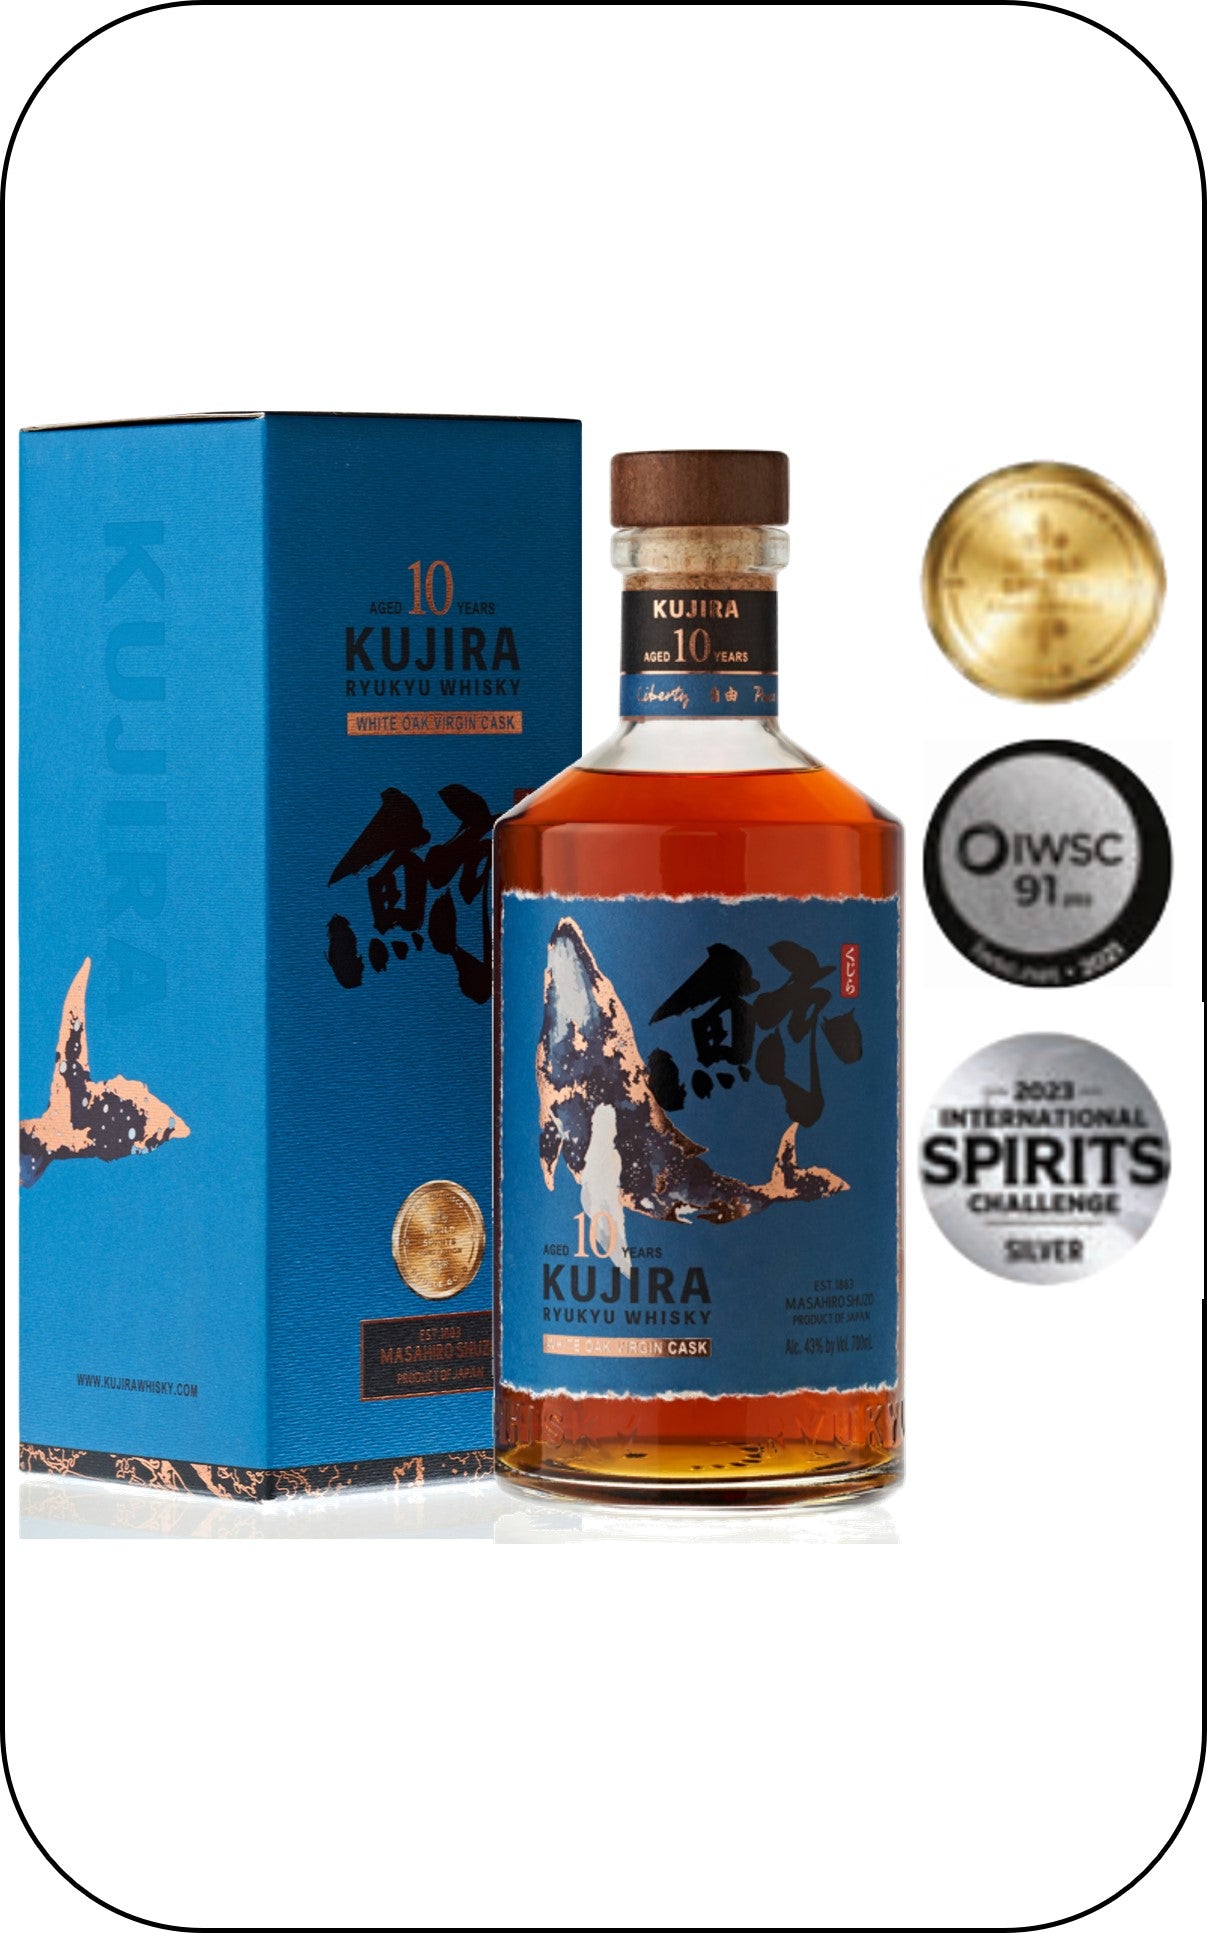 KUJIRA Ryukyu Blended 10 Years Whisky - NON CHILL FILTERED